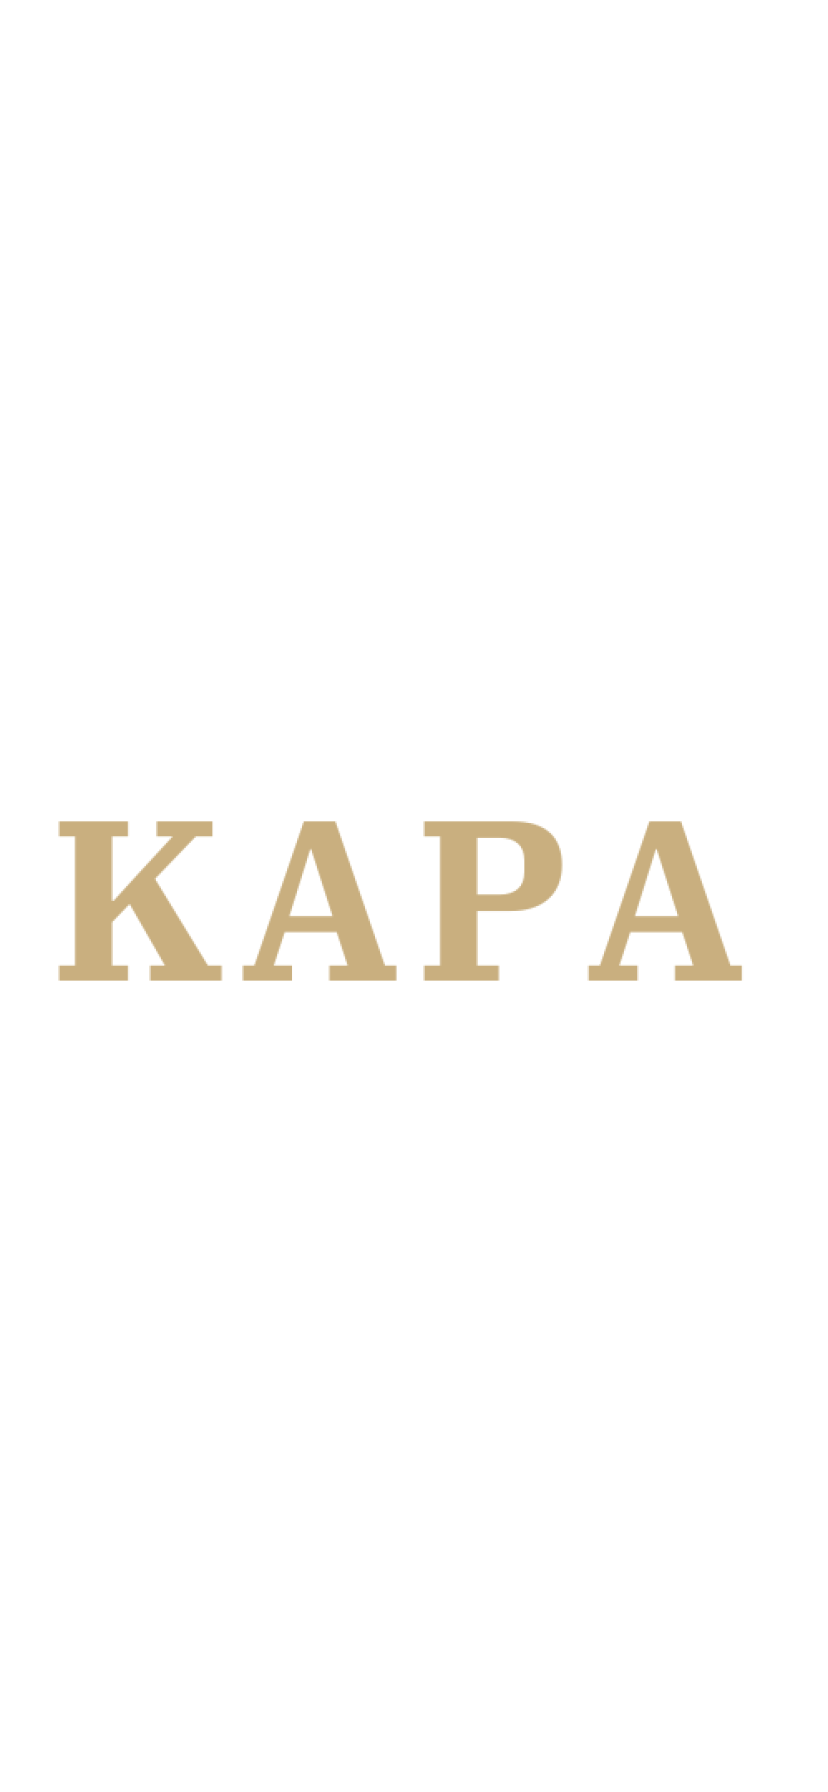 Kapa.co domain name for sale